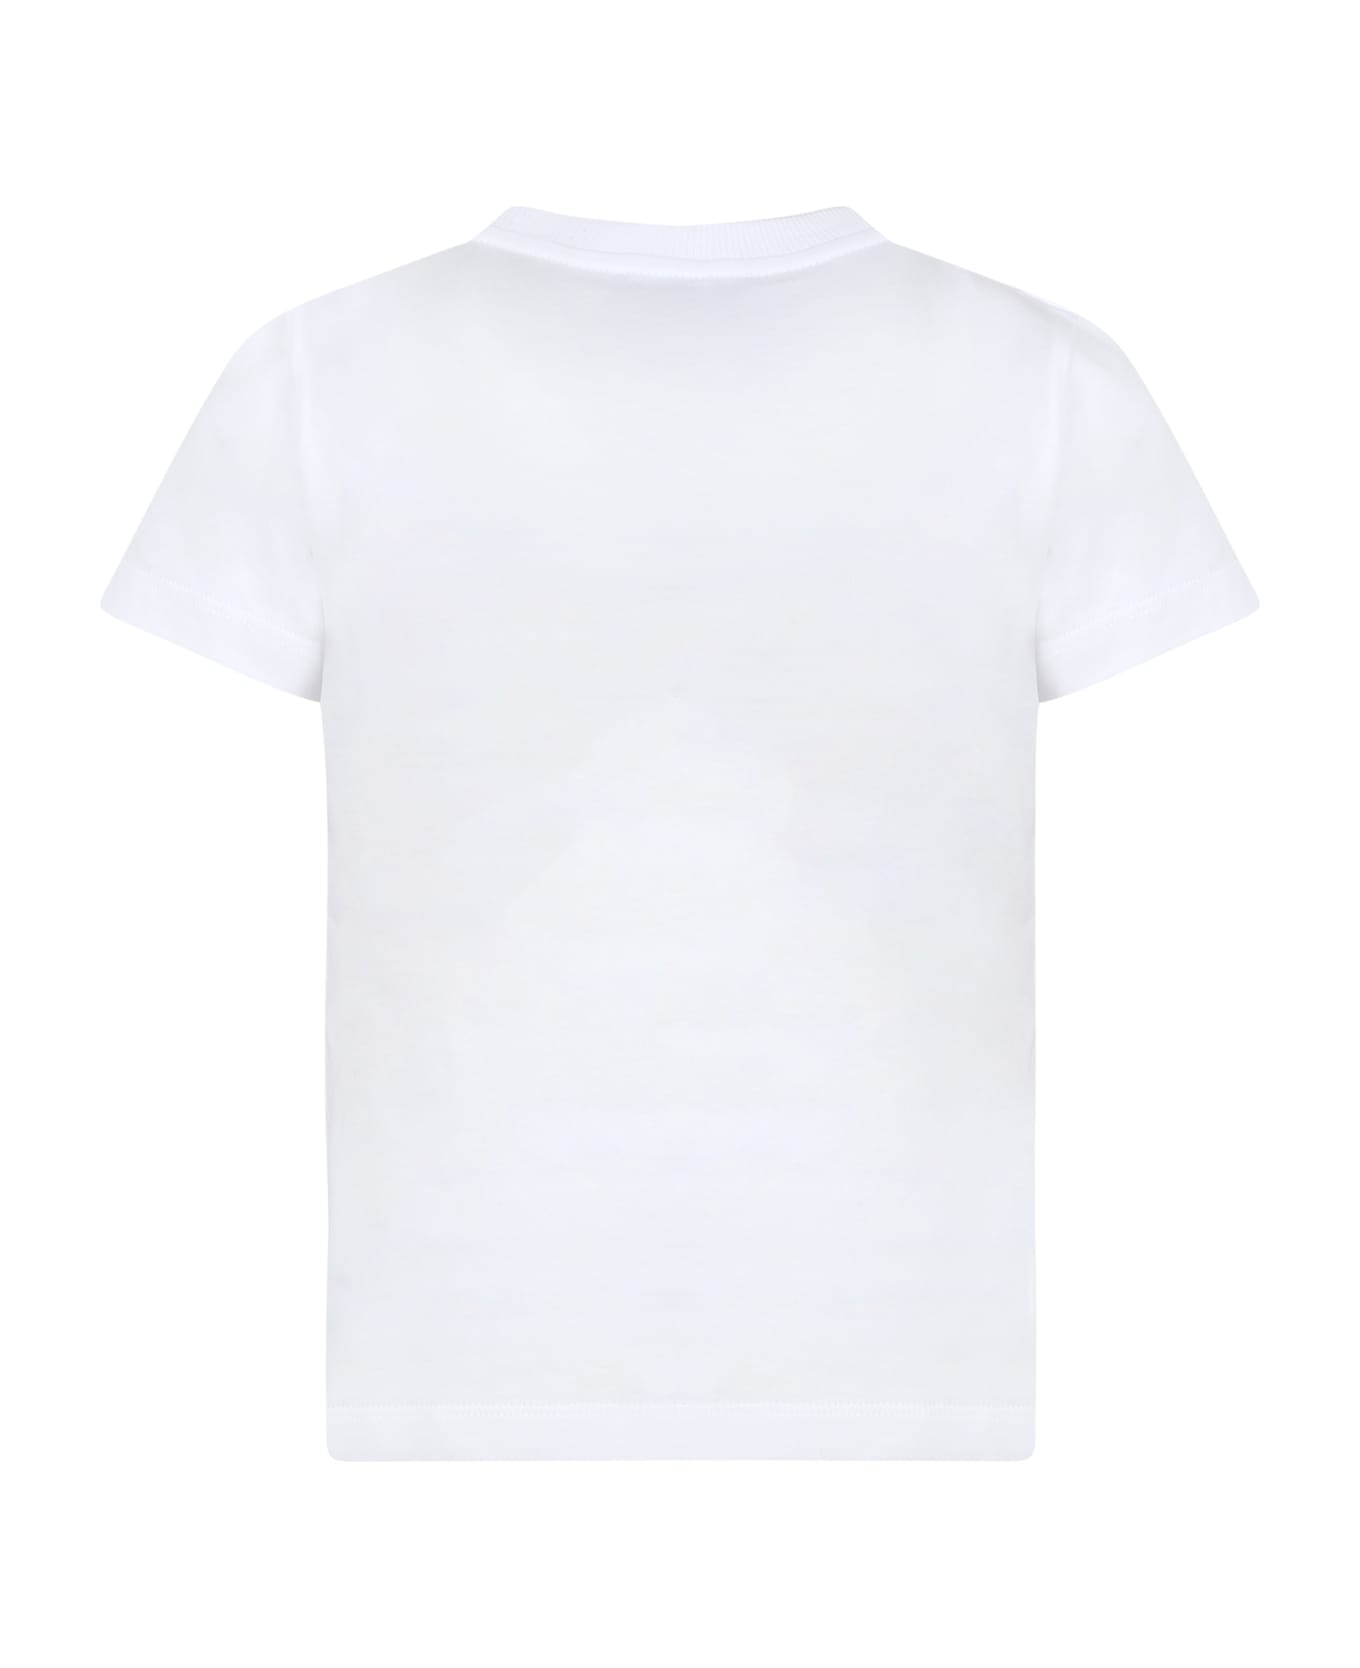 Moschino White T-shirt For Kids With Black Print - White